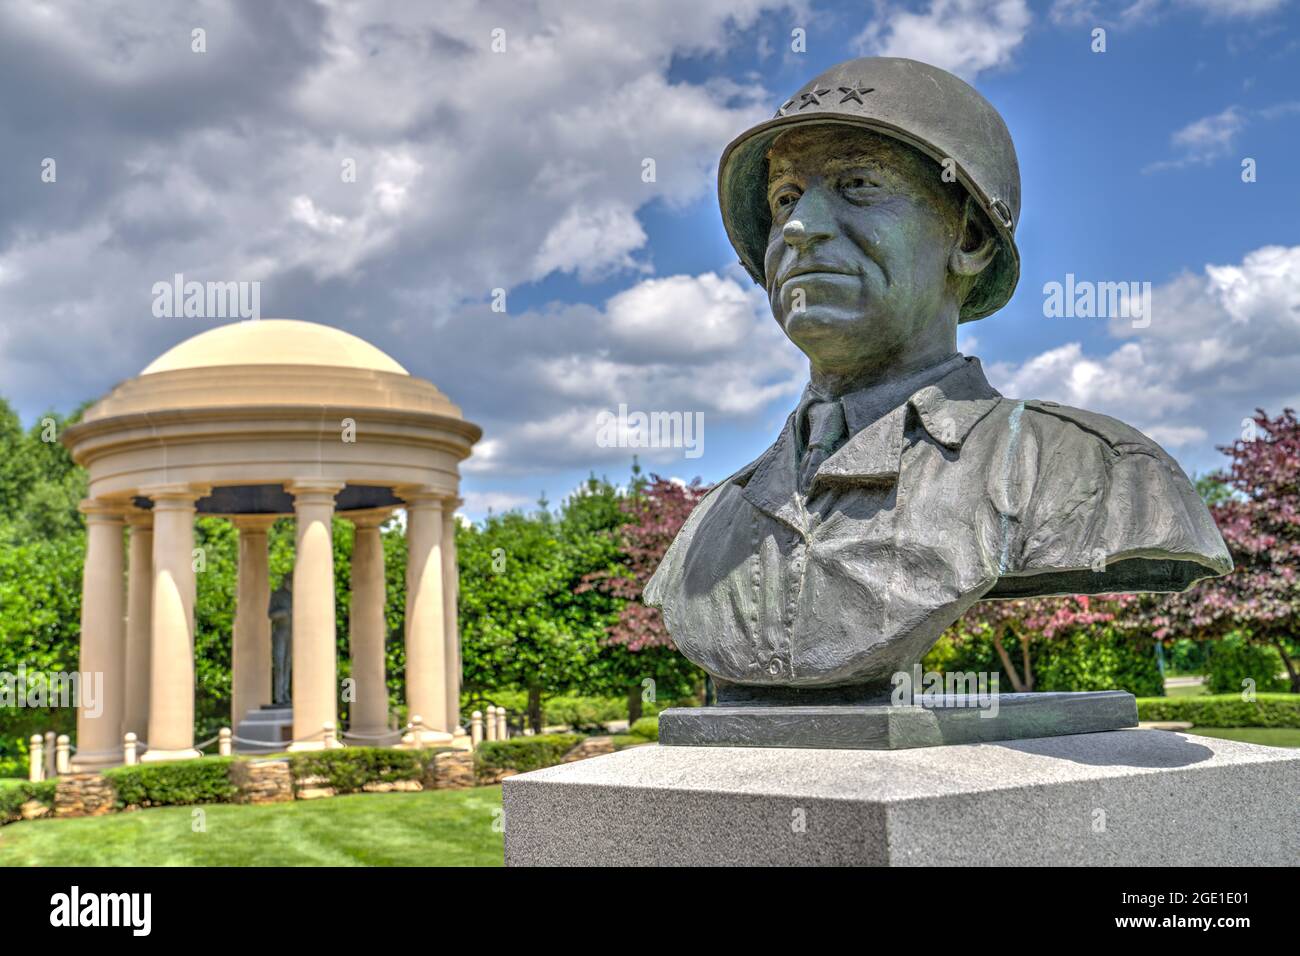 Busto del Lt. Generale Omar Bradley dal Padiglione del Comandante Supremo nel Richard S. Reynolds Sr. Garden al National D-Day Memorial a Bedford, VI Foto Stock